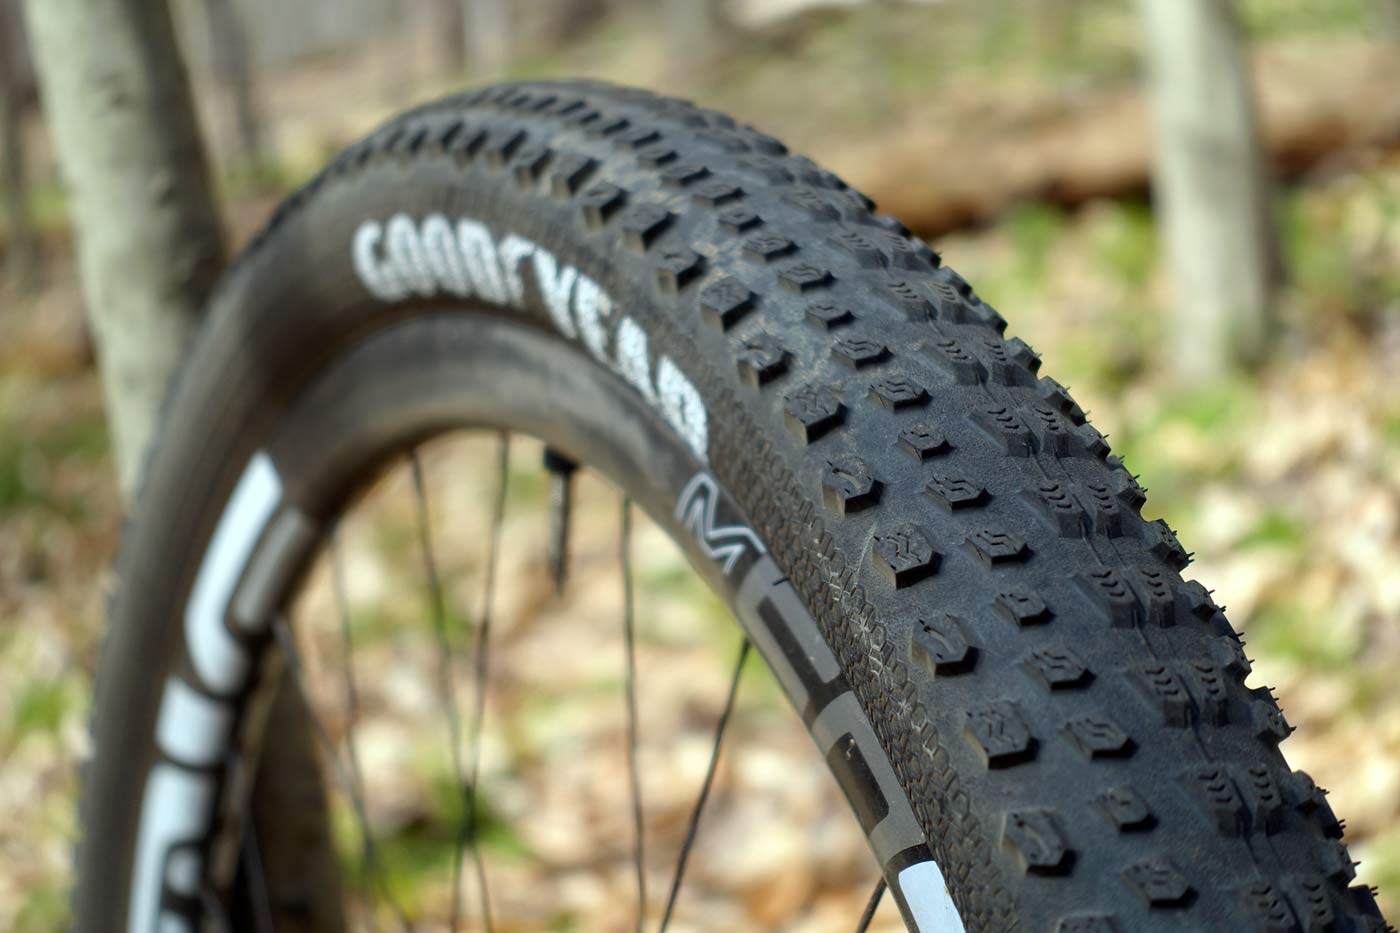 2018 Goodyear Peak XC cross country mountain bike tires